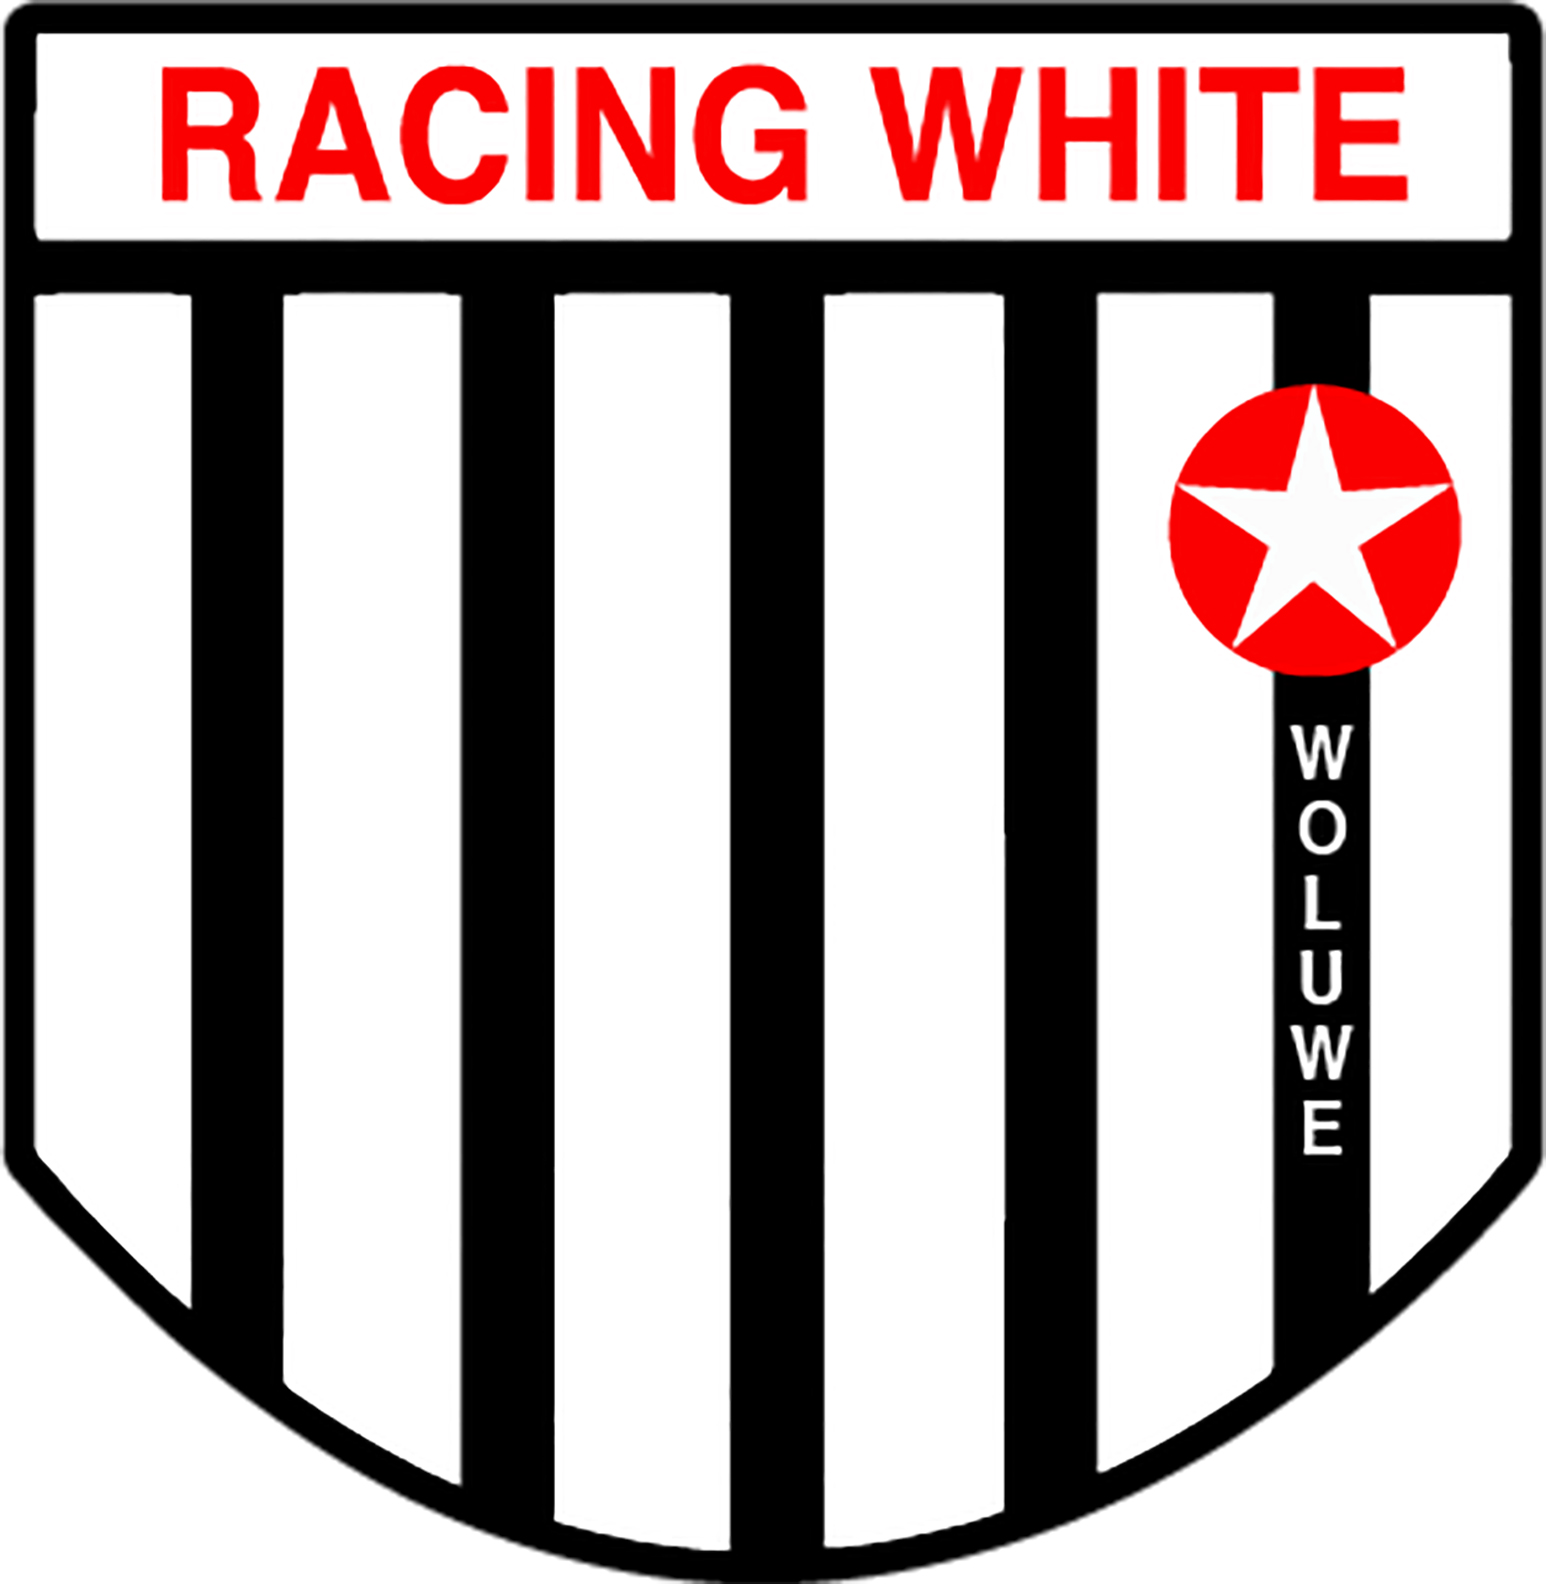 10 - Racing White Woluwe A